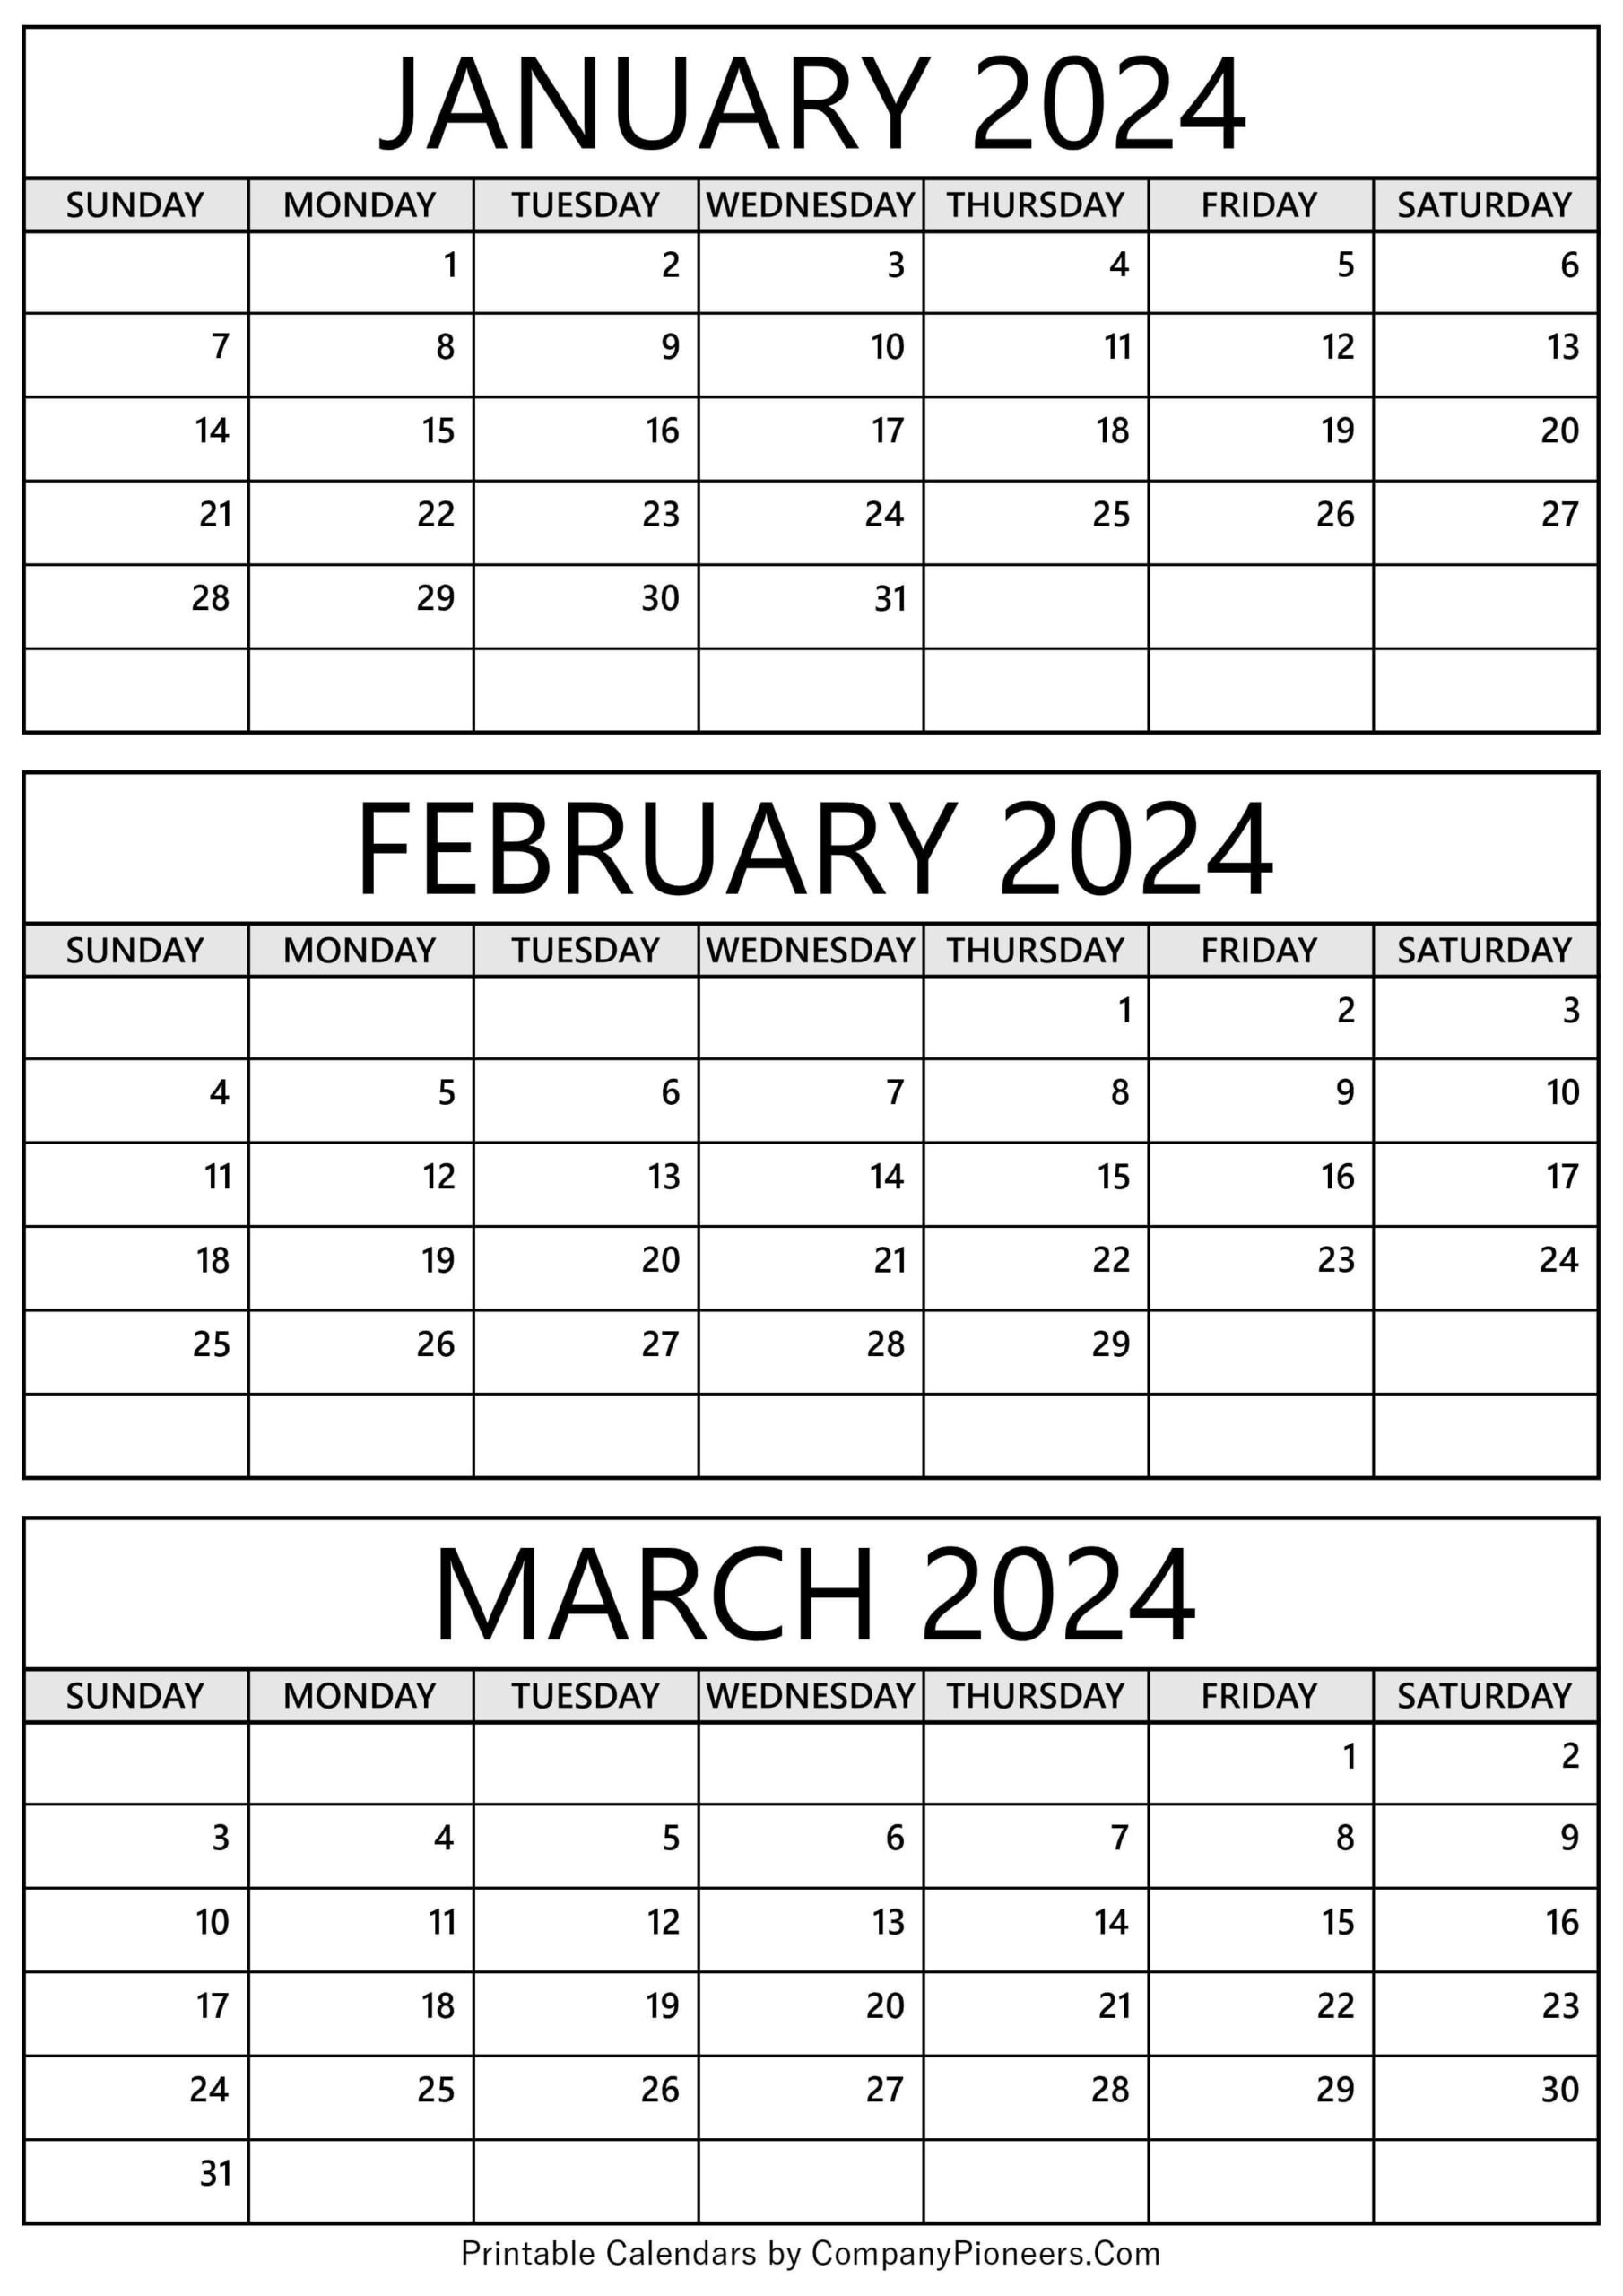 January February March 2024 Calendar Printable - Template for January February March 2024 Calendar Printable